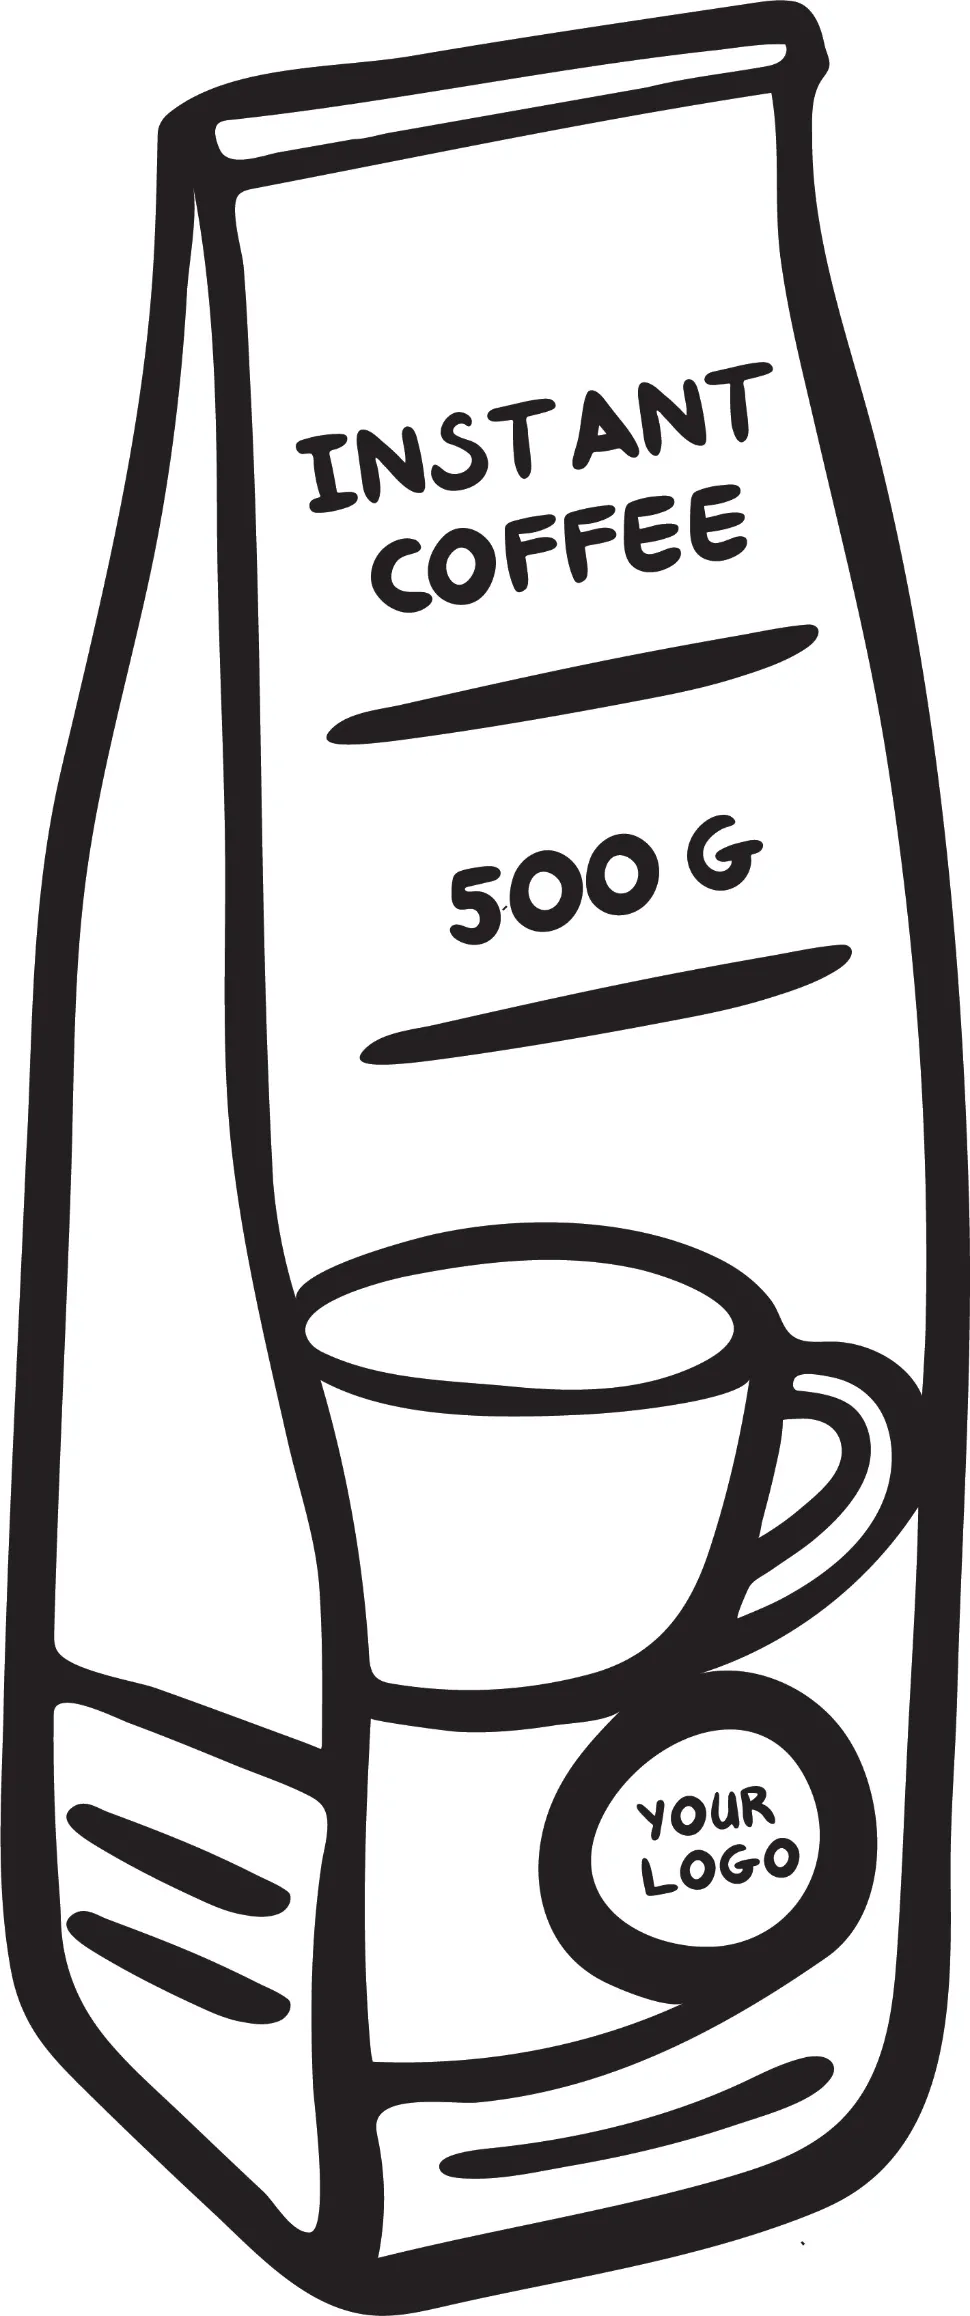 Instant coffee 500g.jpg